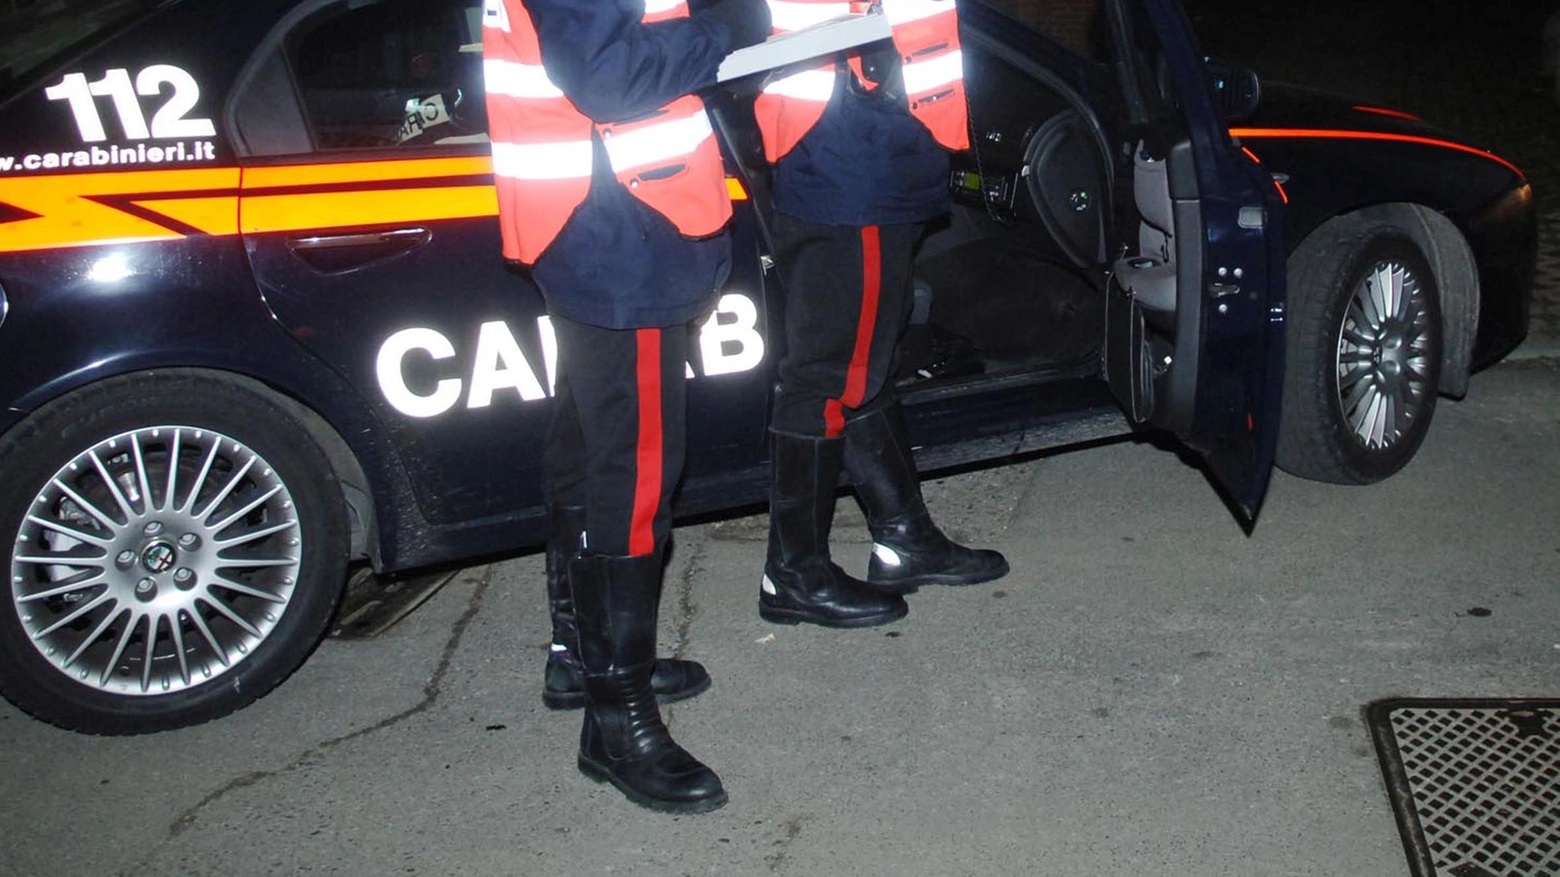 Carabinieri, foto generica (Newpress)